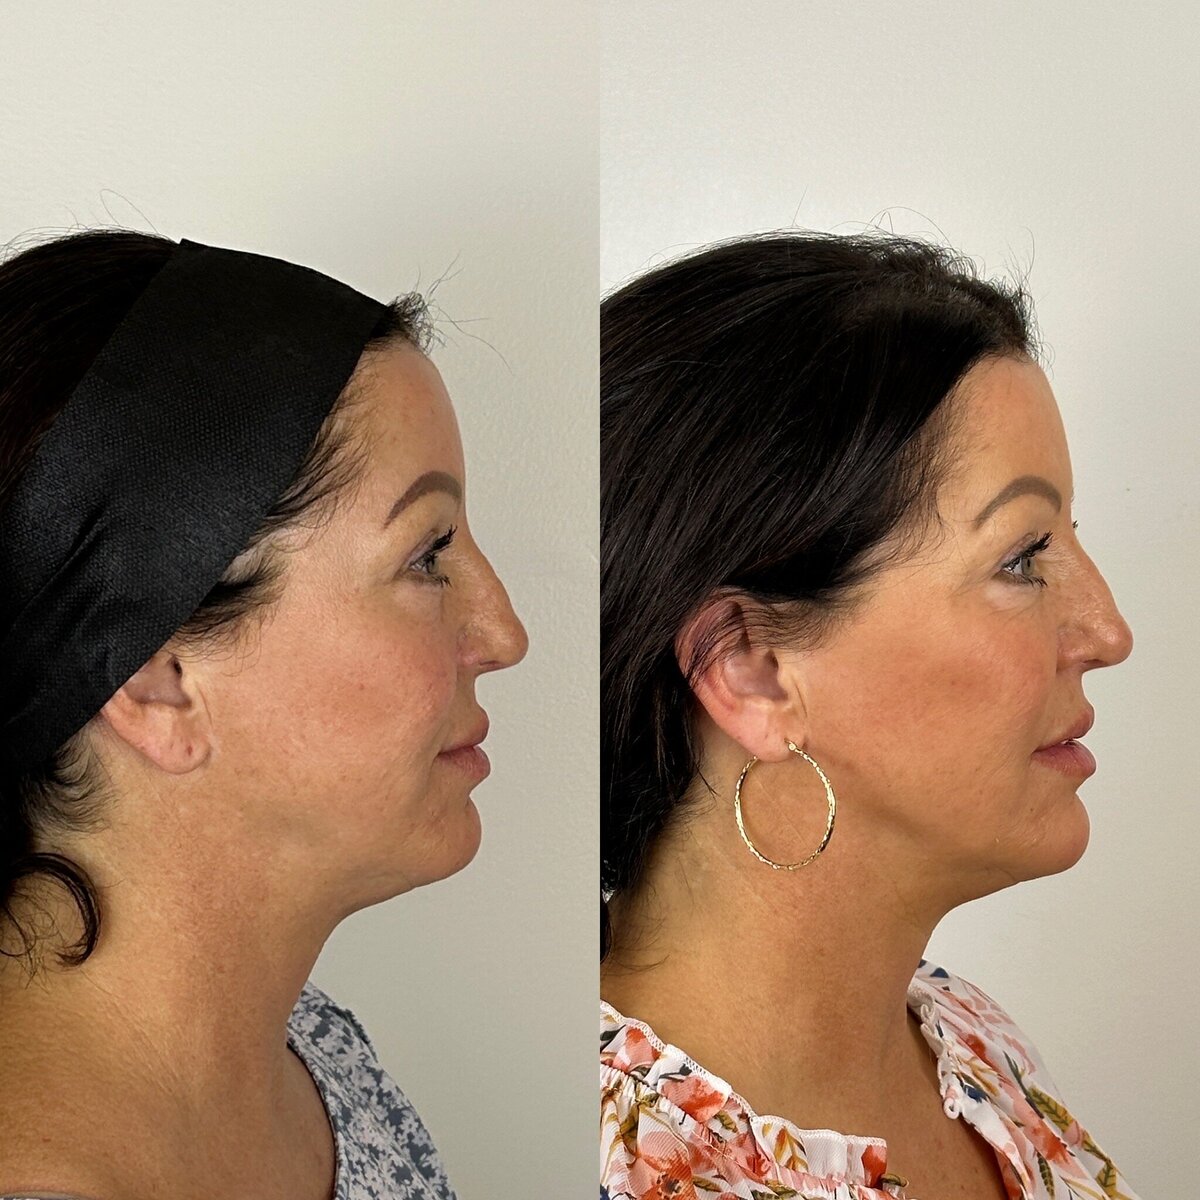 Full Facial Balancing with Botox & Fillers